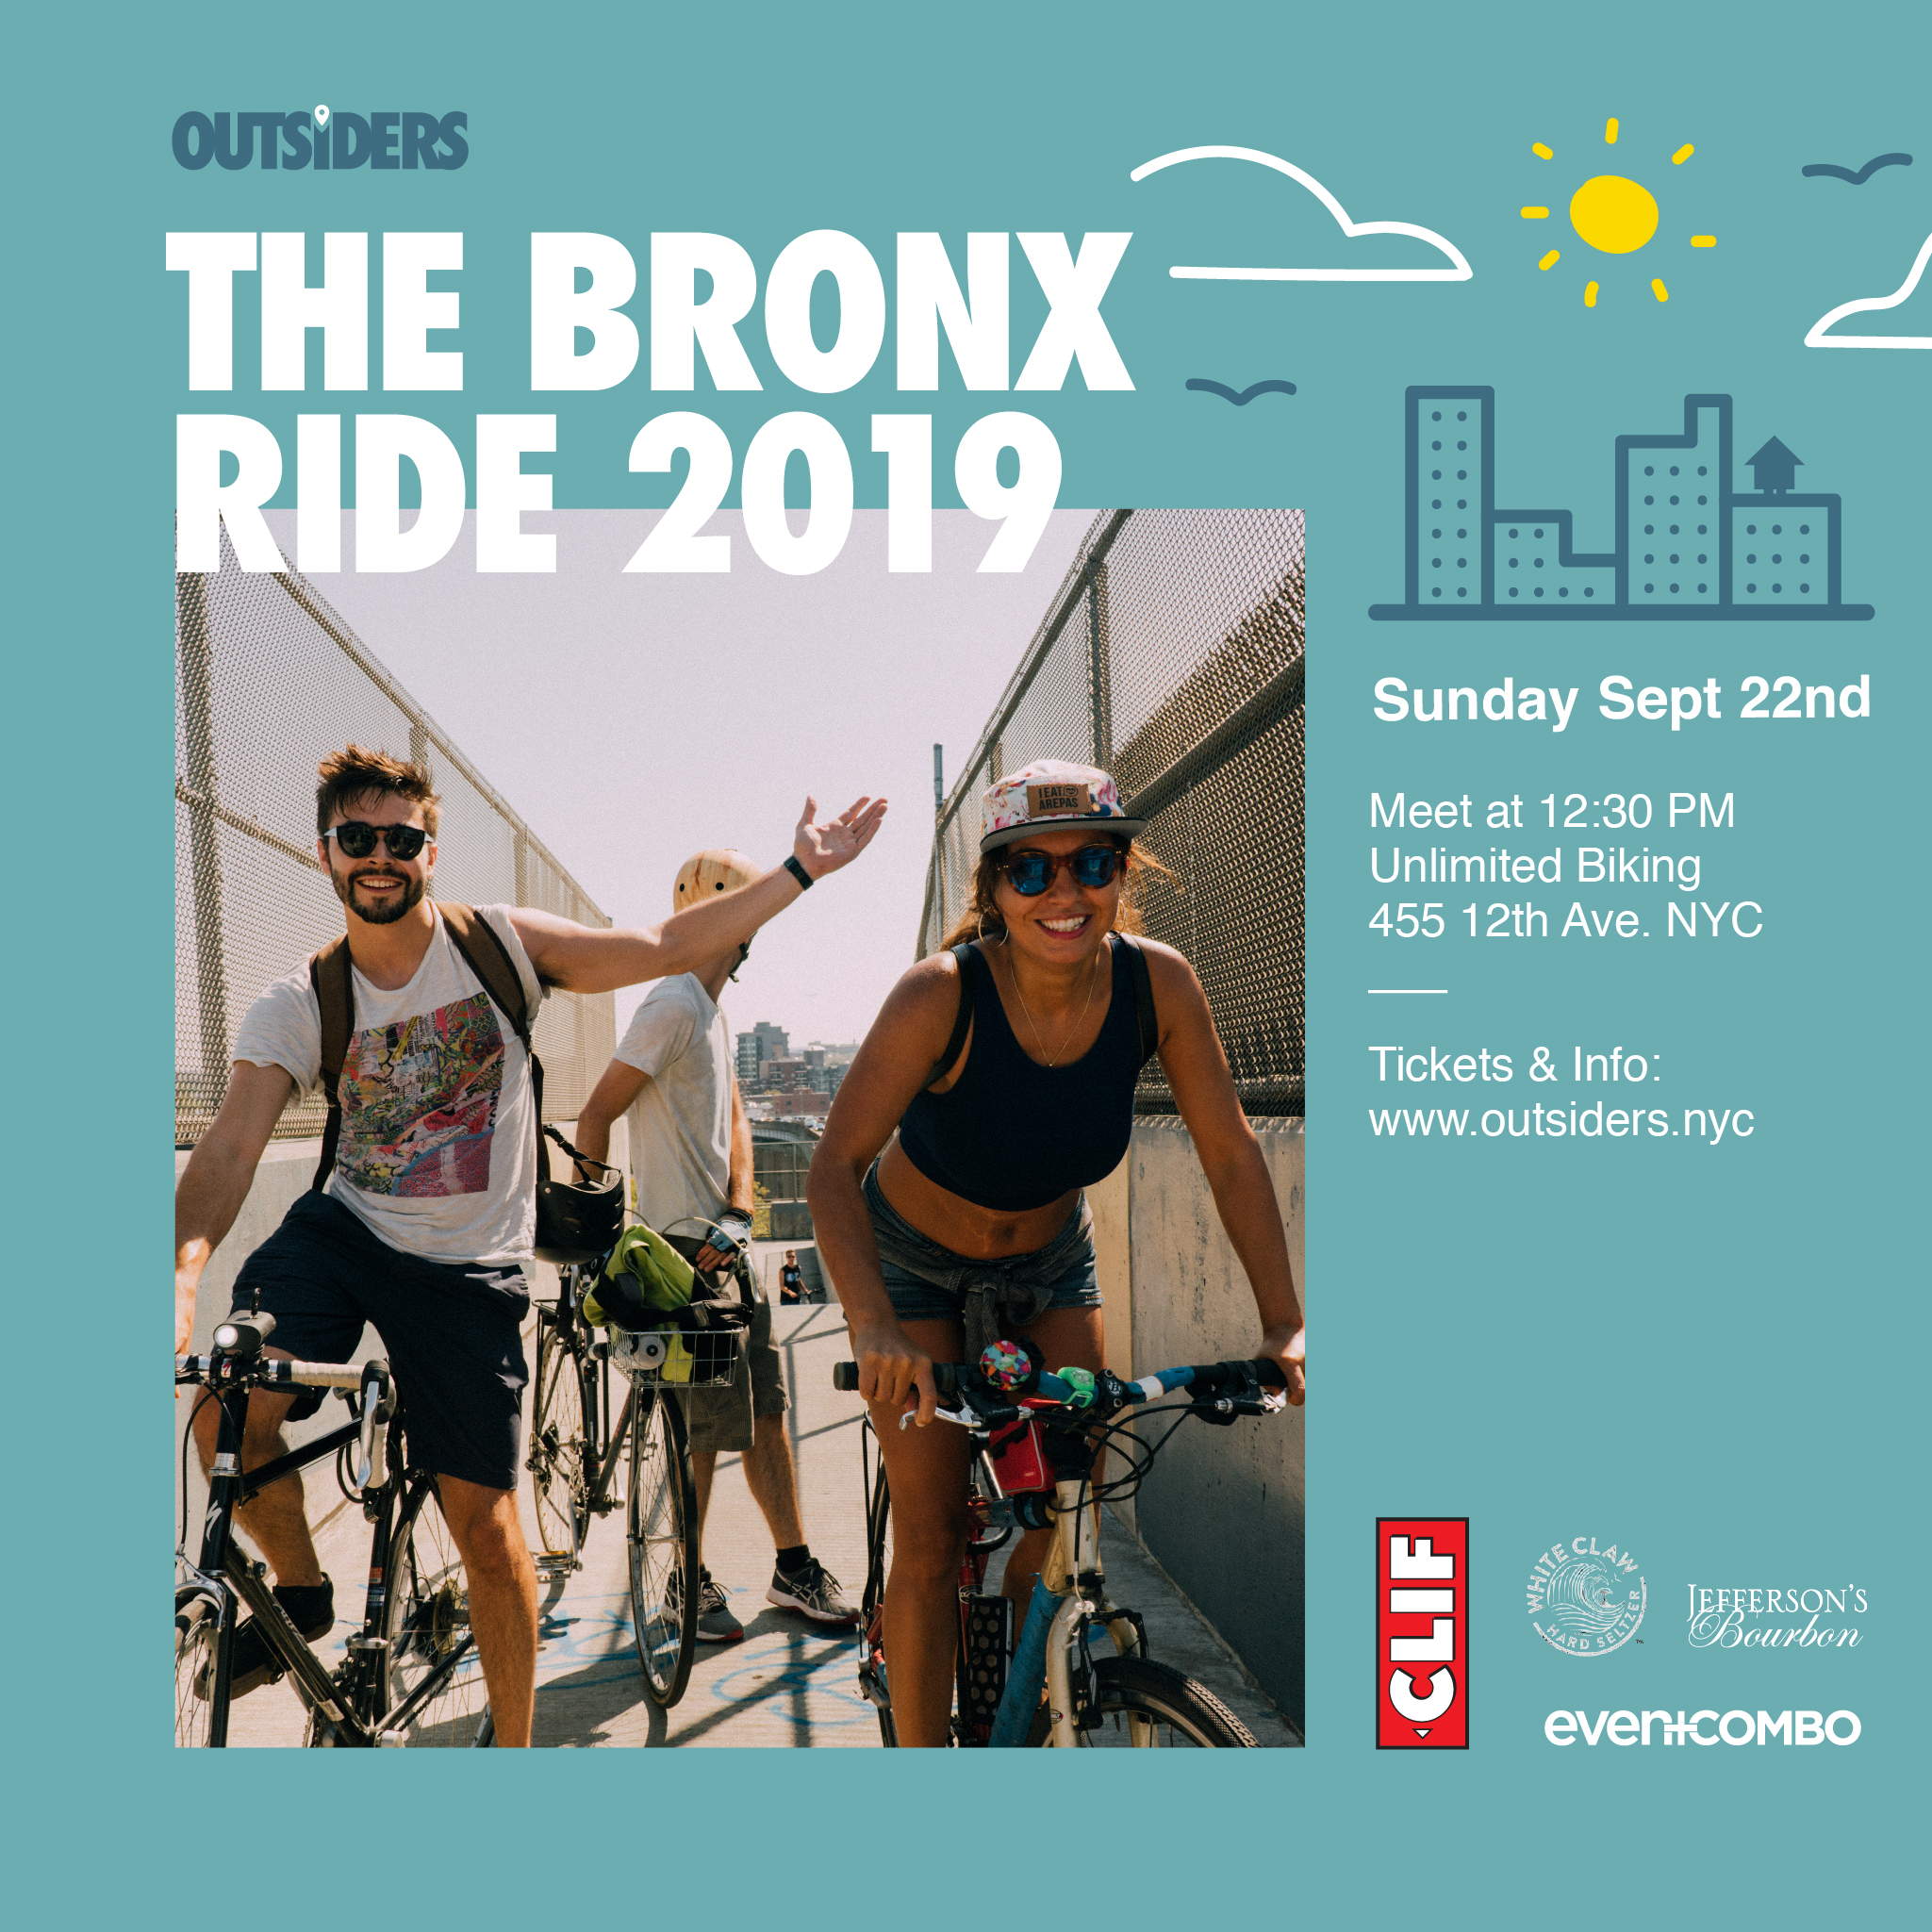 The Bronx Ride 2019